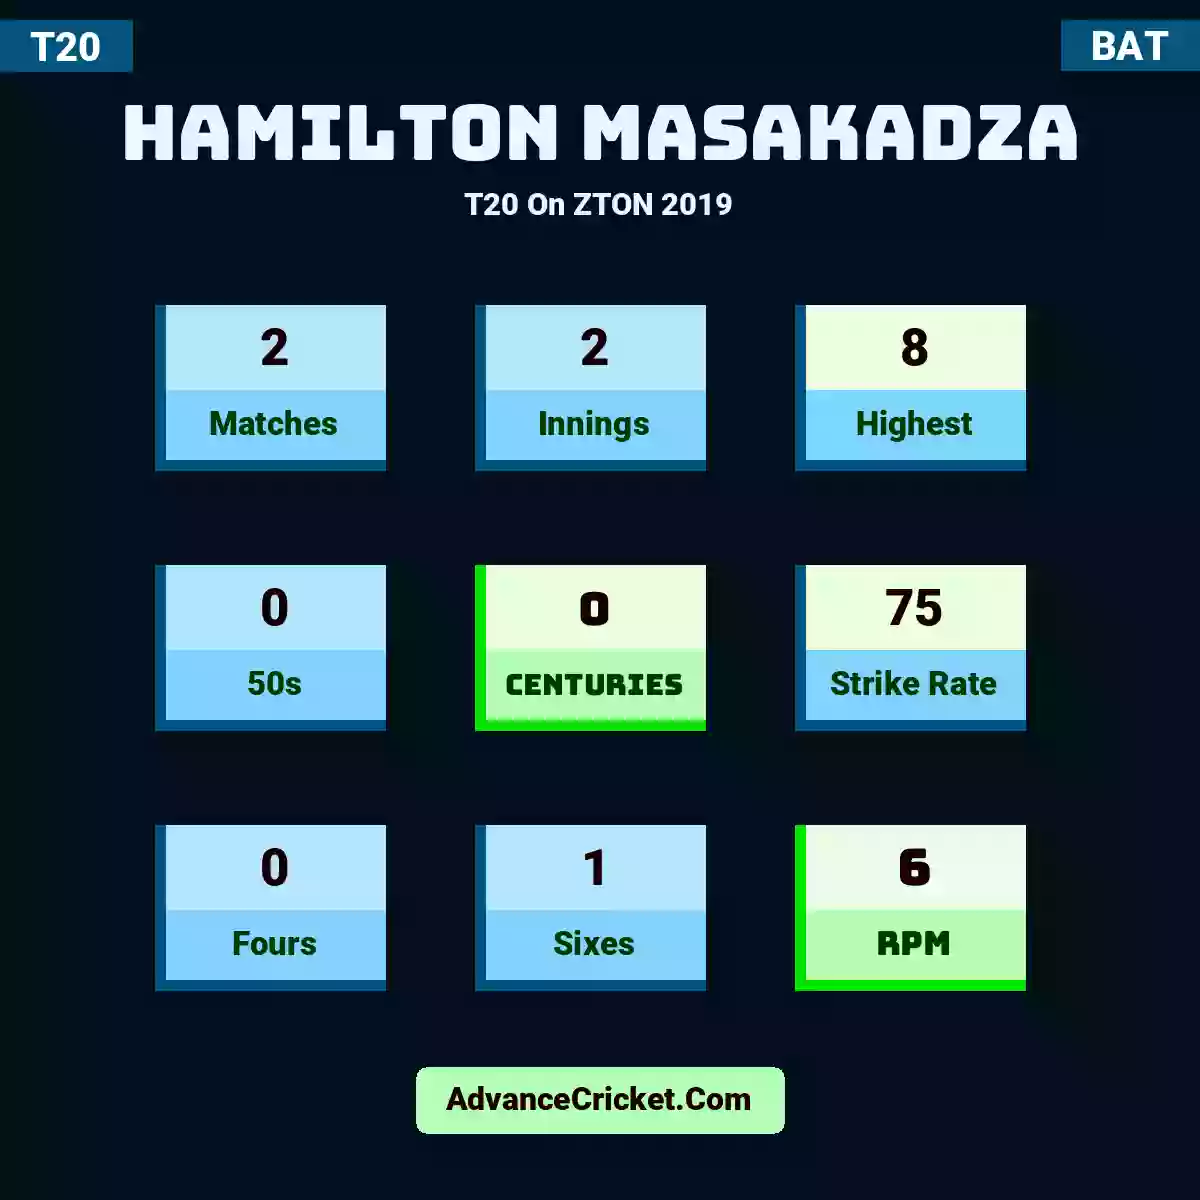 Hamilton Masakadza T20  On ZTON 2019, Hamilton Masakadza played 2 matches, scored 8 runs as highest, 0 half-centuries, and 0 centuries, with a strike rate of 75. H.Masakadza hit 0 fours and 1 sixes, with an RPM of 6.